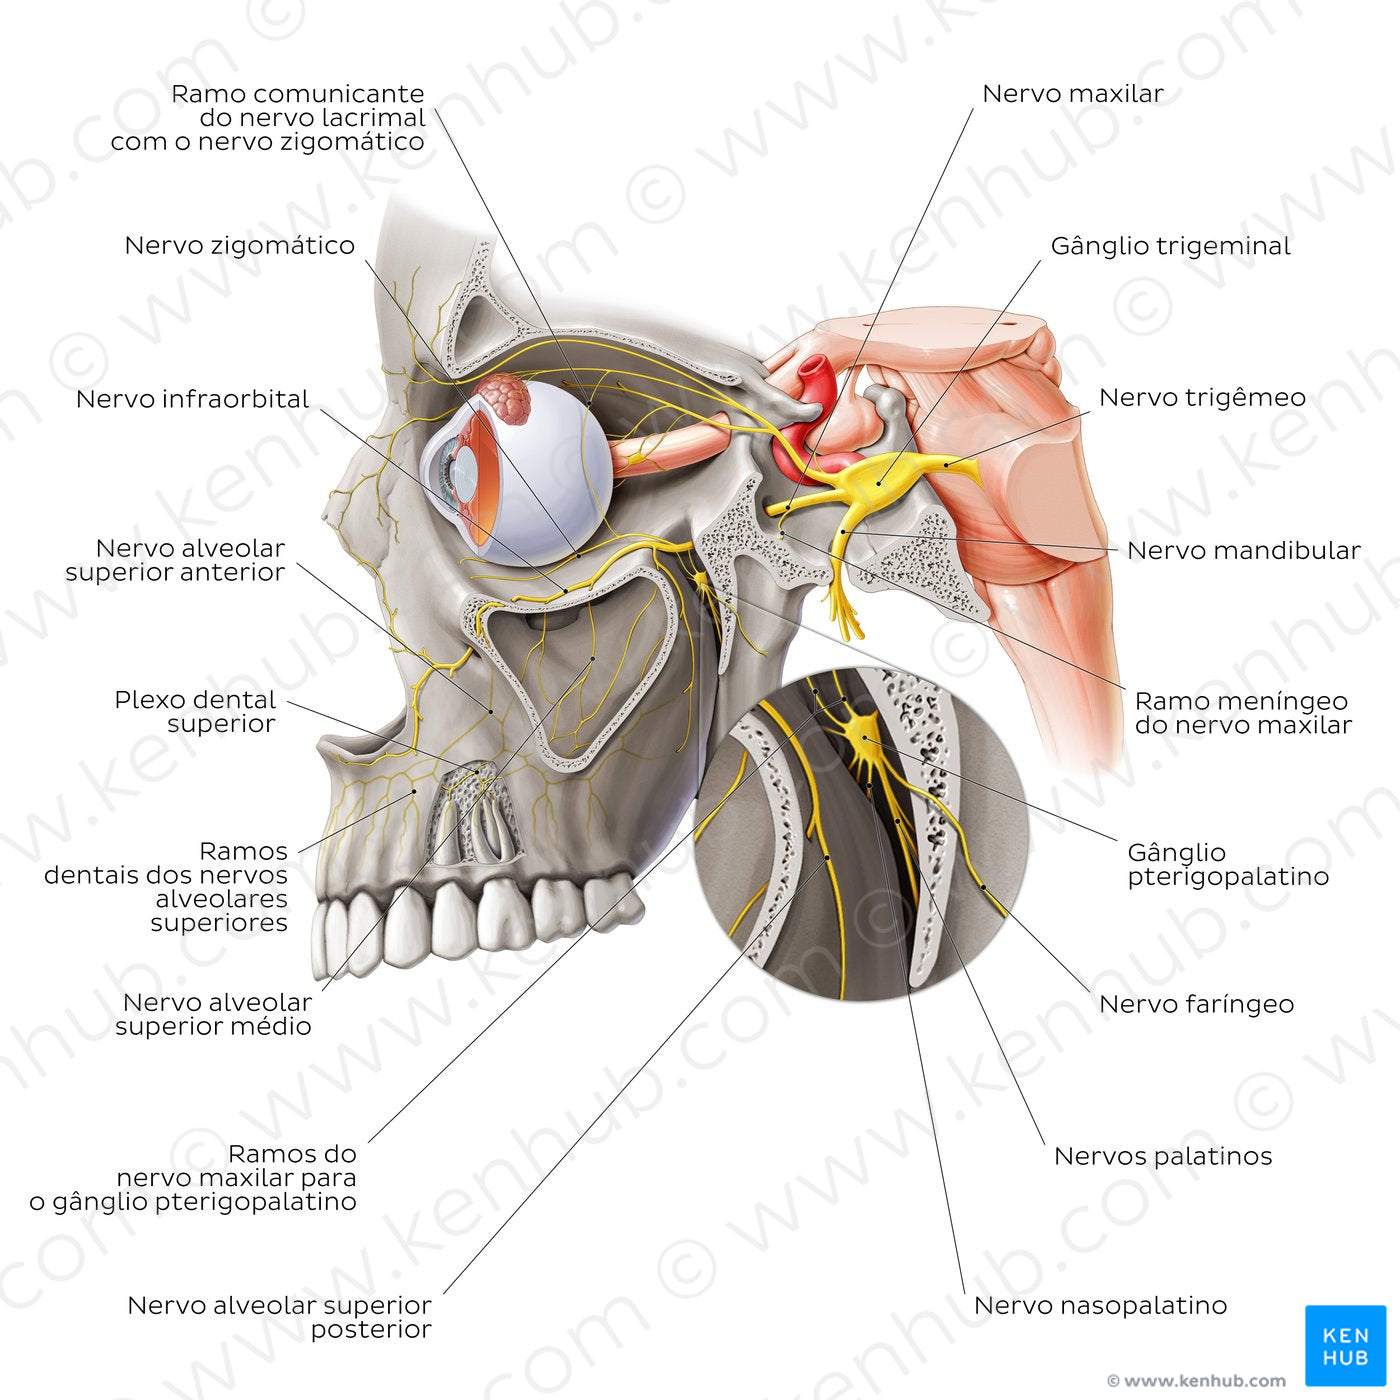 Maxillary nerve (Portuguese)